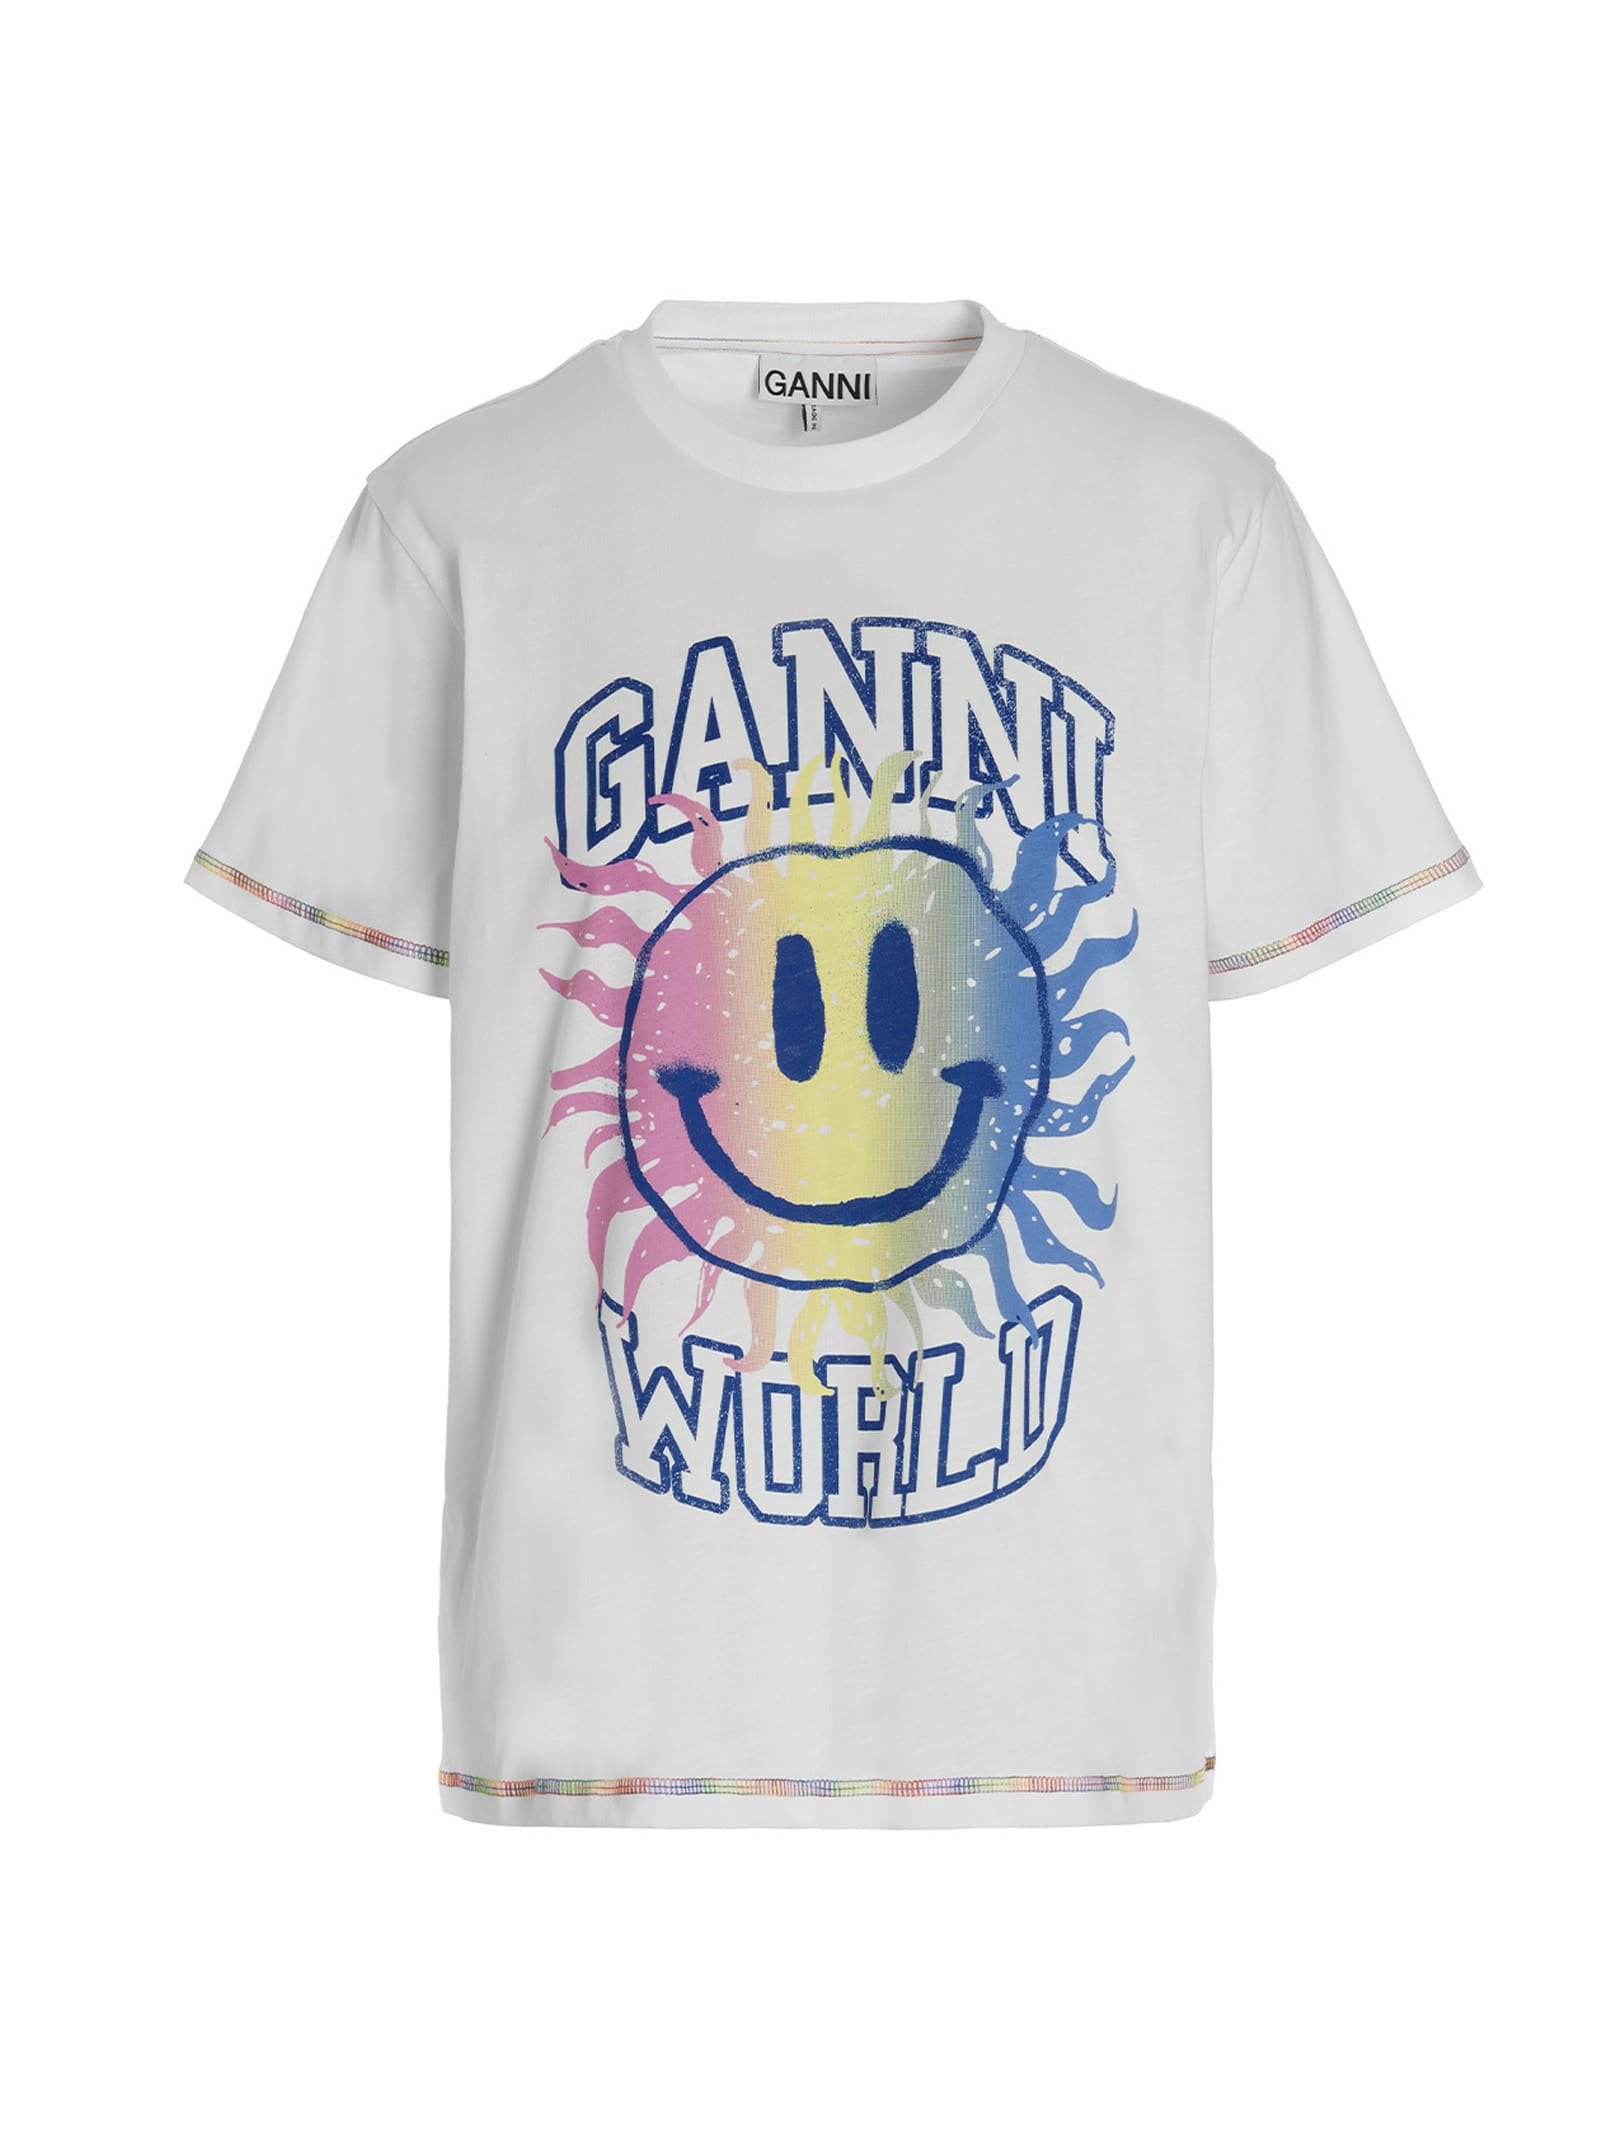 Ganni T-shirt smiley Ganni World